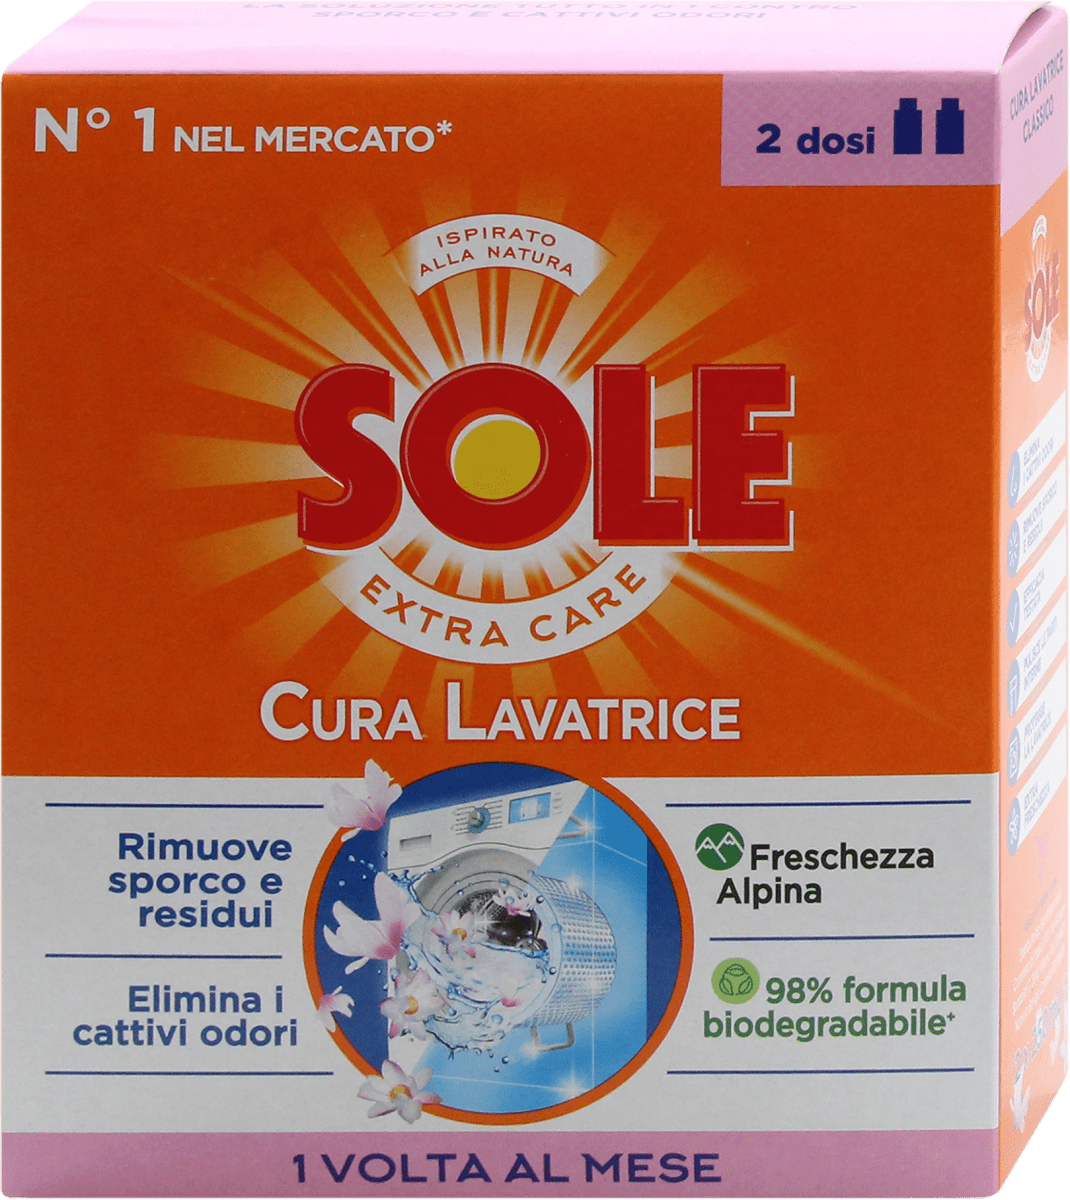 SOLE Cura Lavatrice Extra Care Regular, 2 pz Acquisti online sempre  convenienti